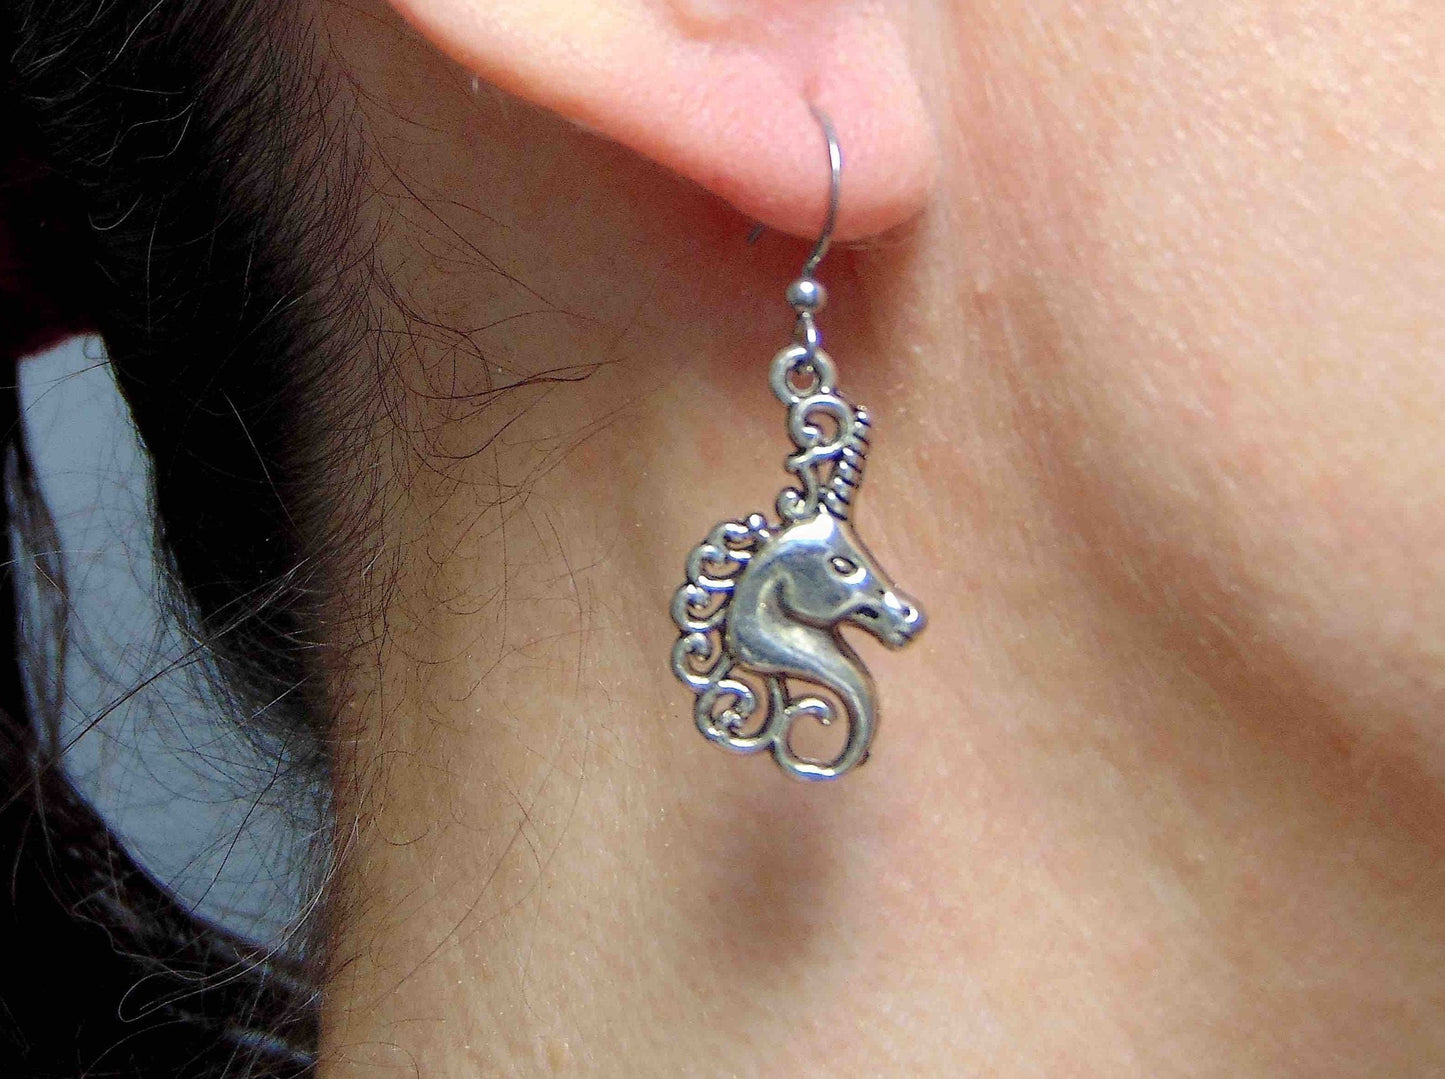 Short earrings with pewter unicorn heads, stainless steel hooks